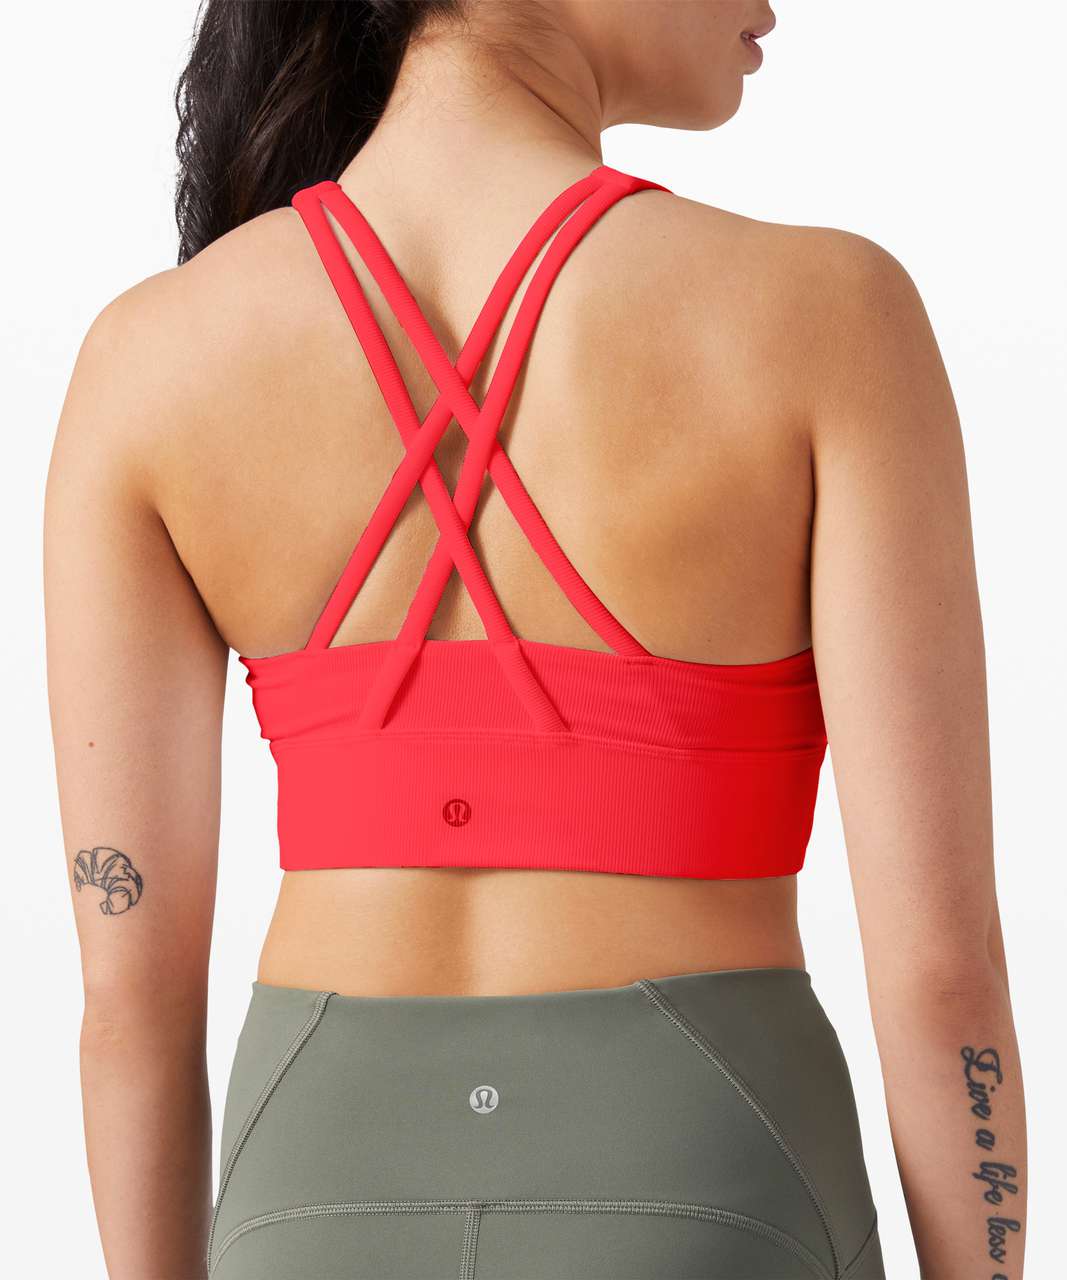 Lululemon Strong Identity Red Sports Bra Size 10 - $35 (39% Off